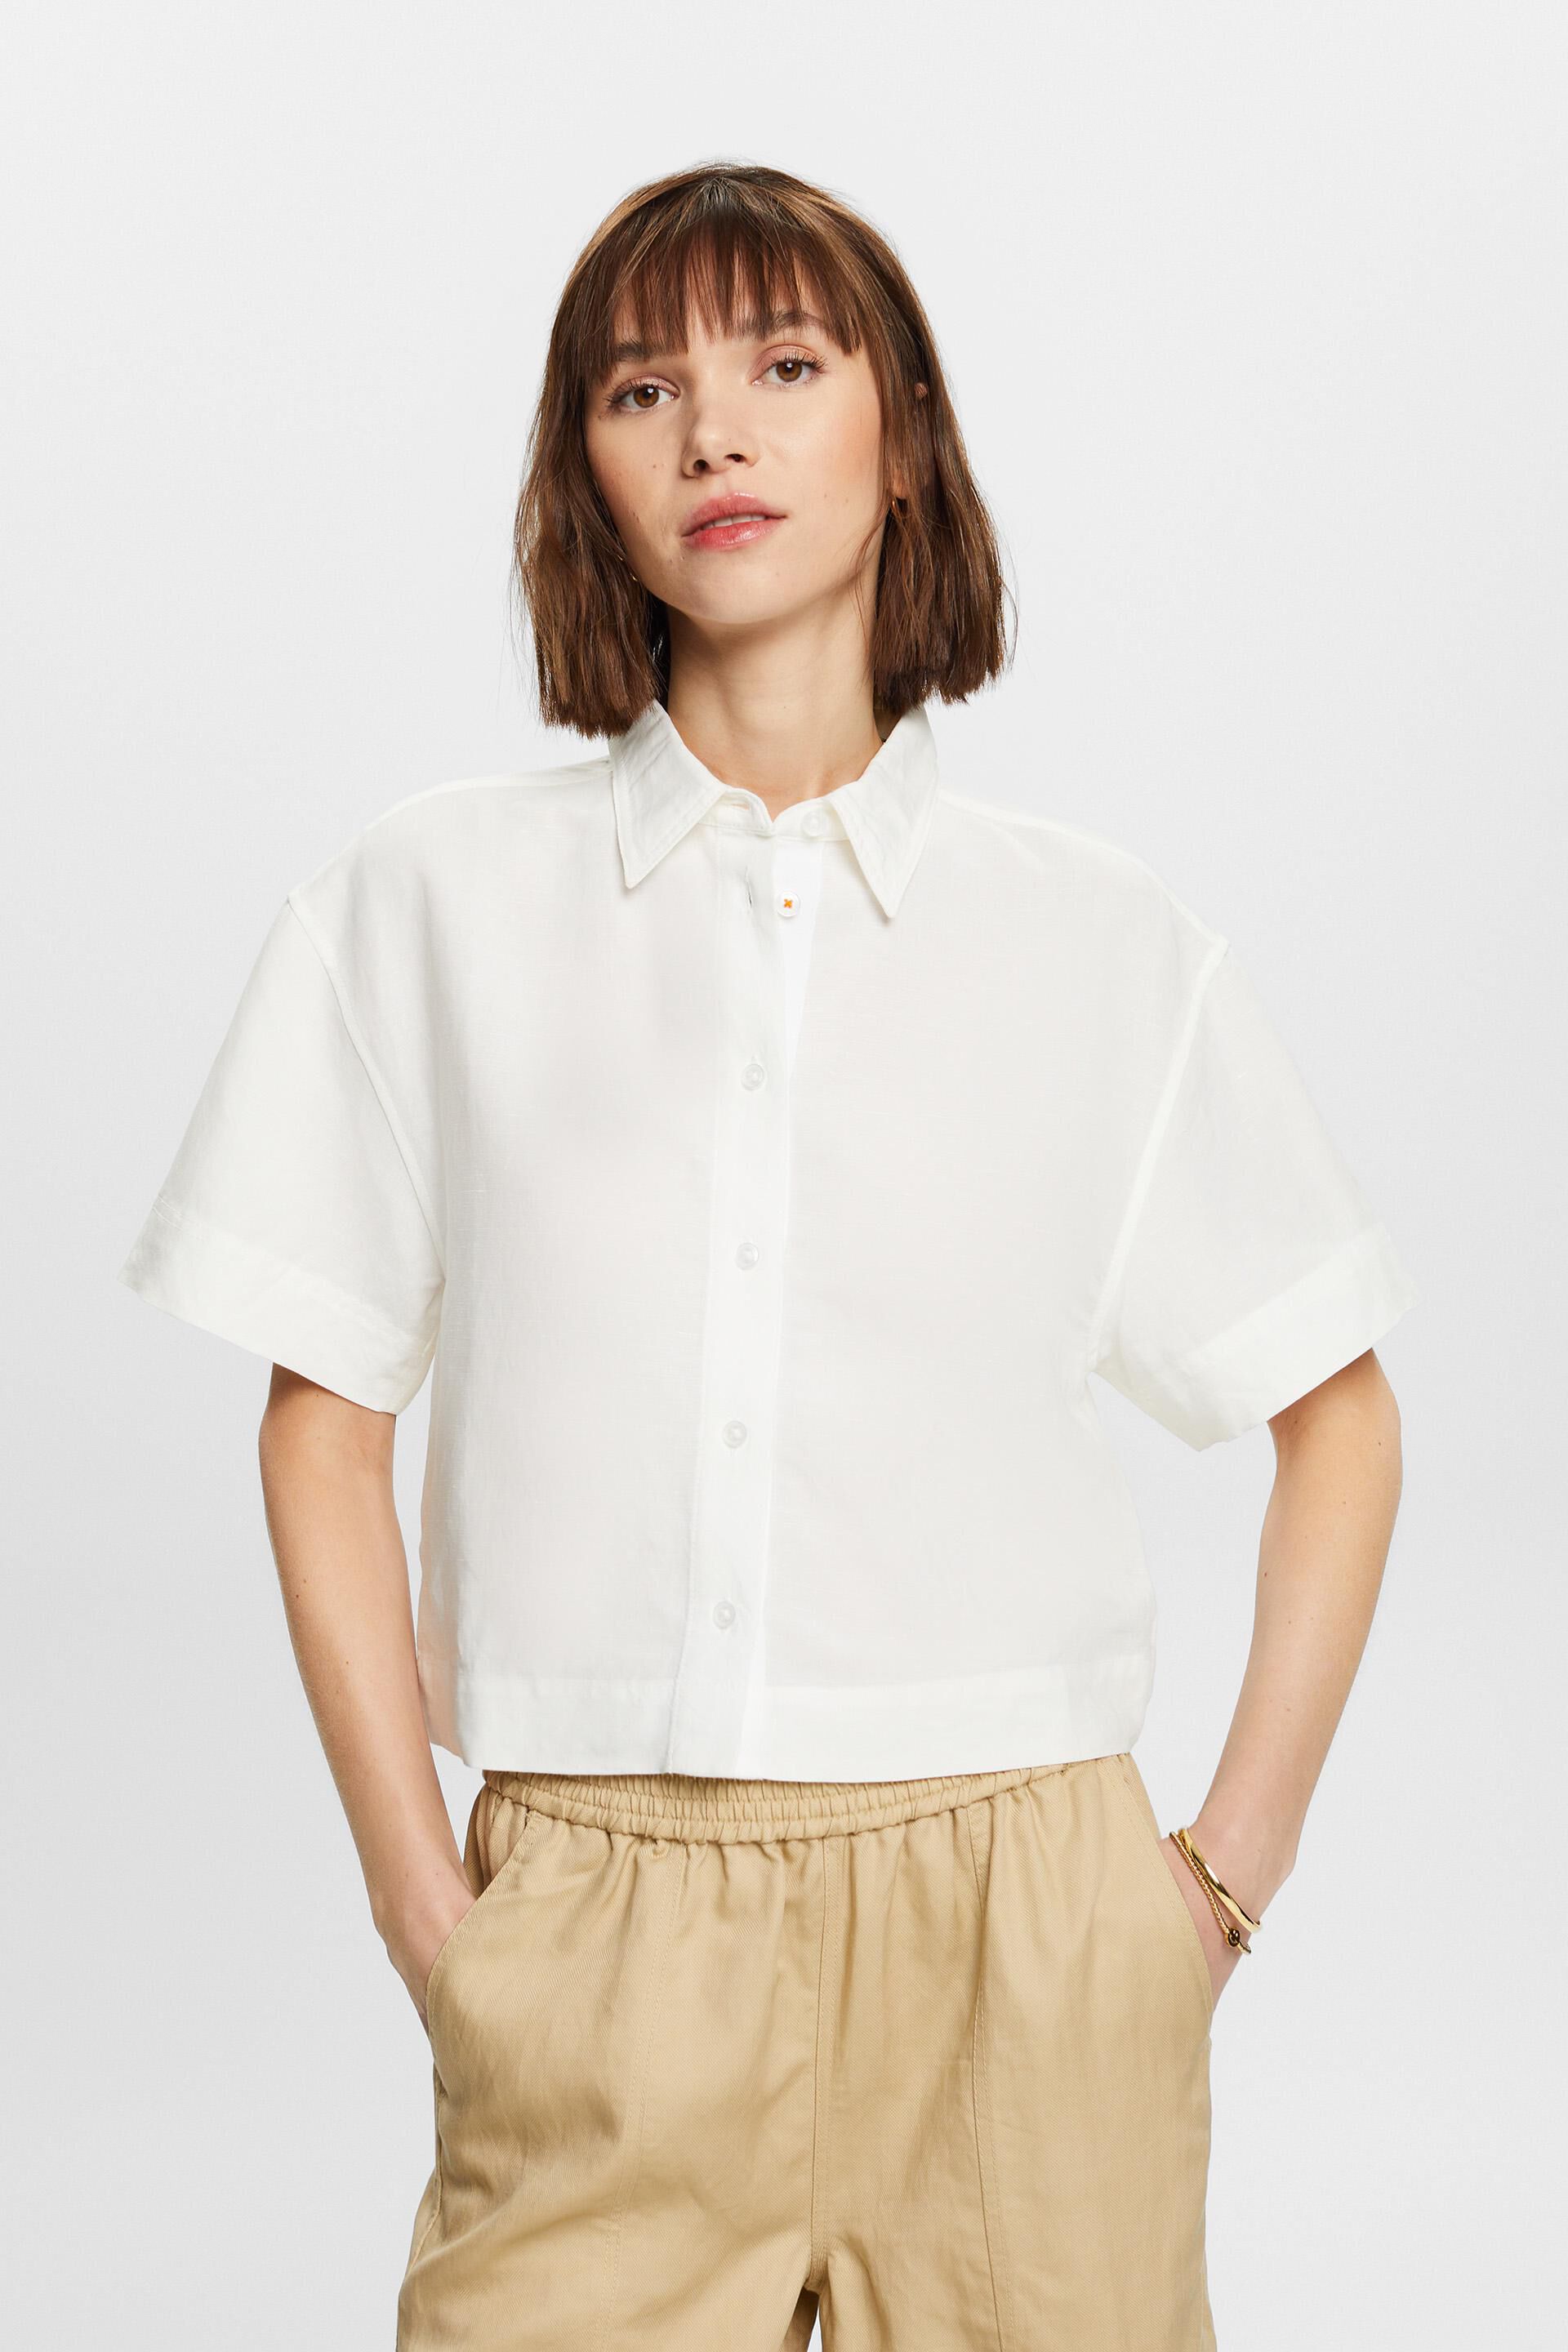 Esprit shirt blouse, Cropped linen blend